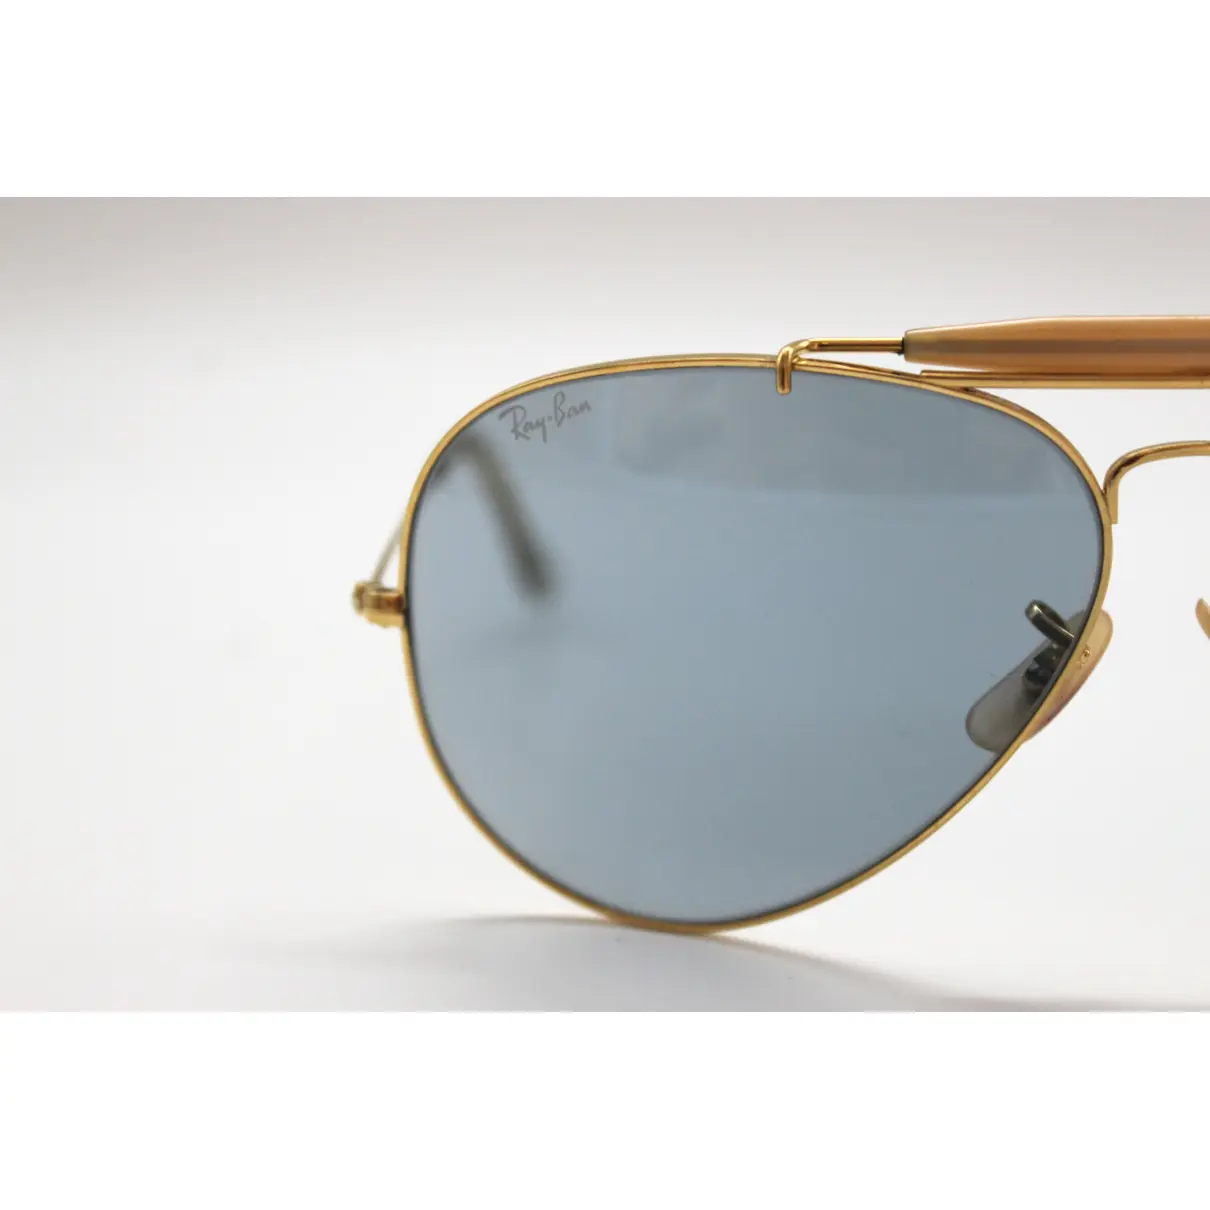 Aviator sunglasses Ray-Ban - Vintage